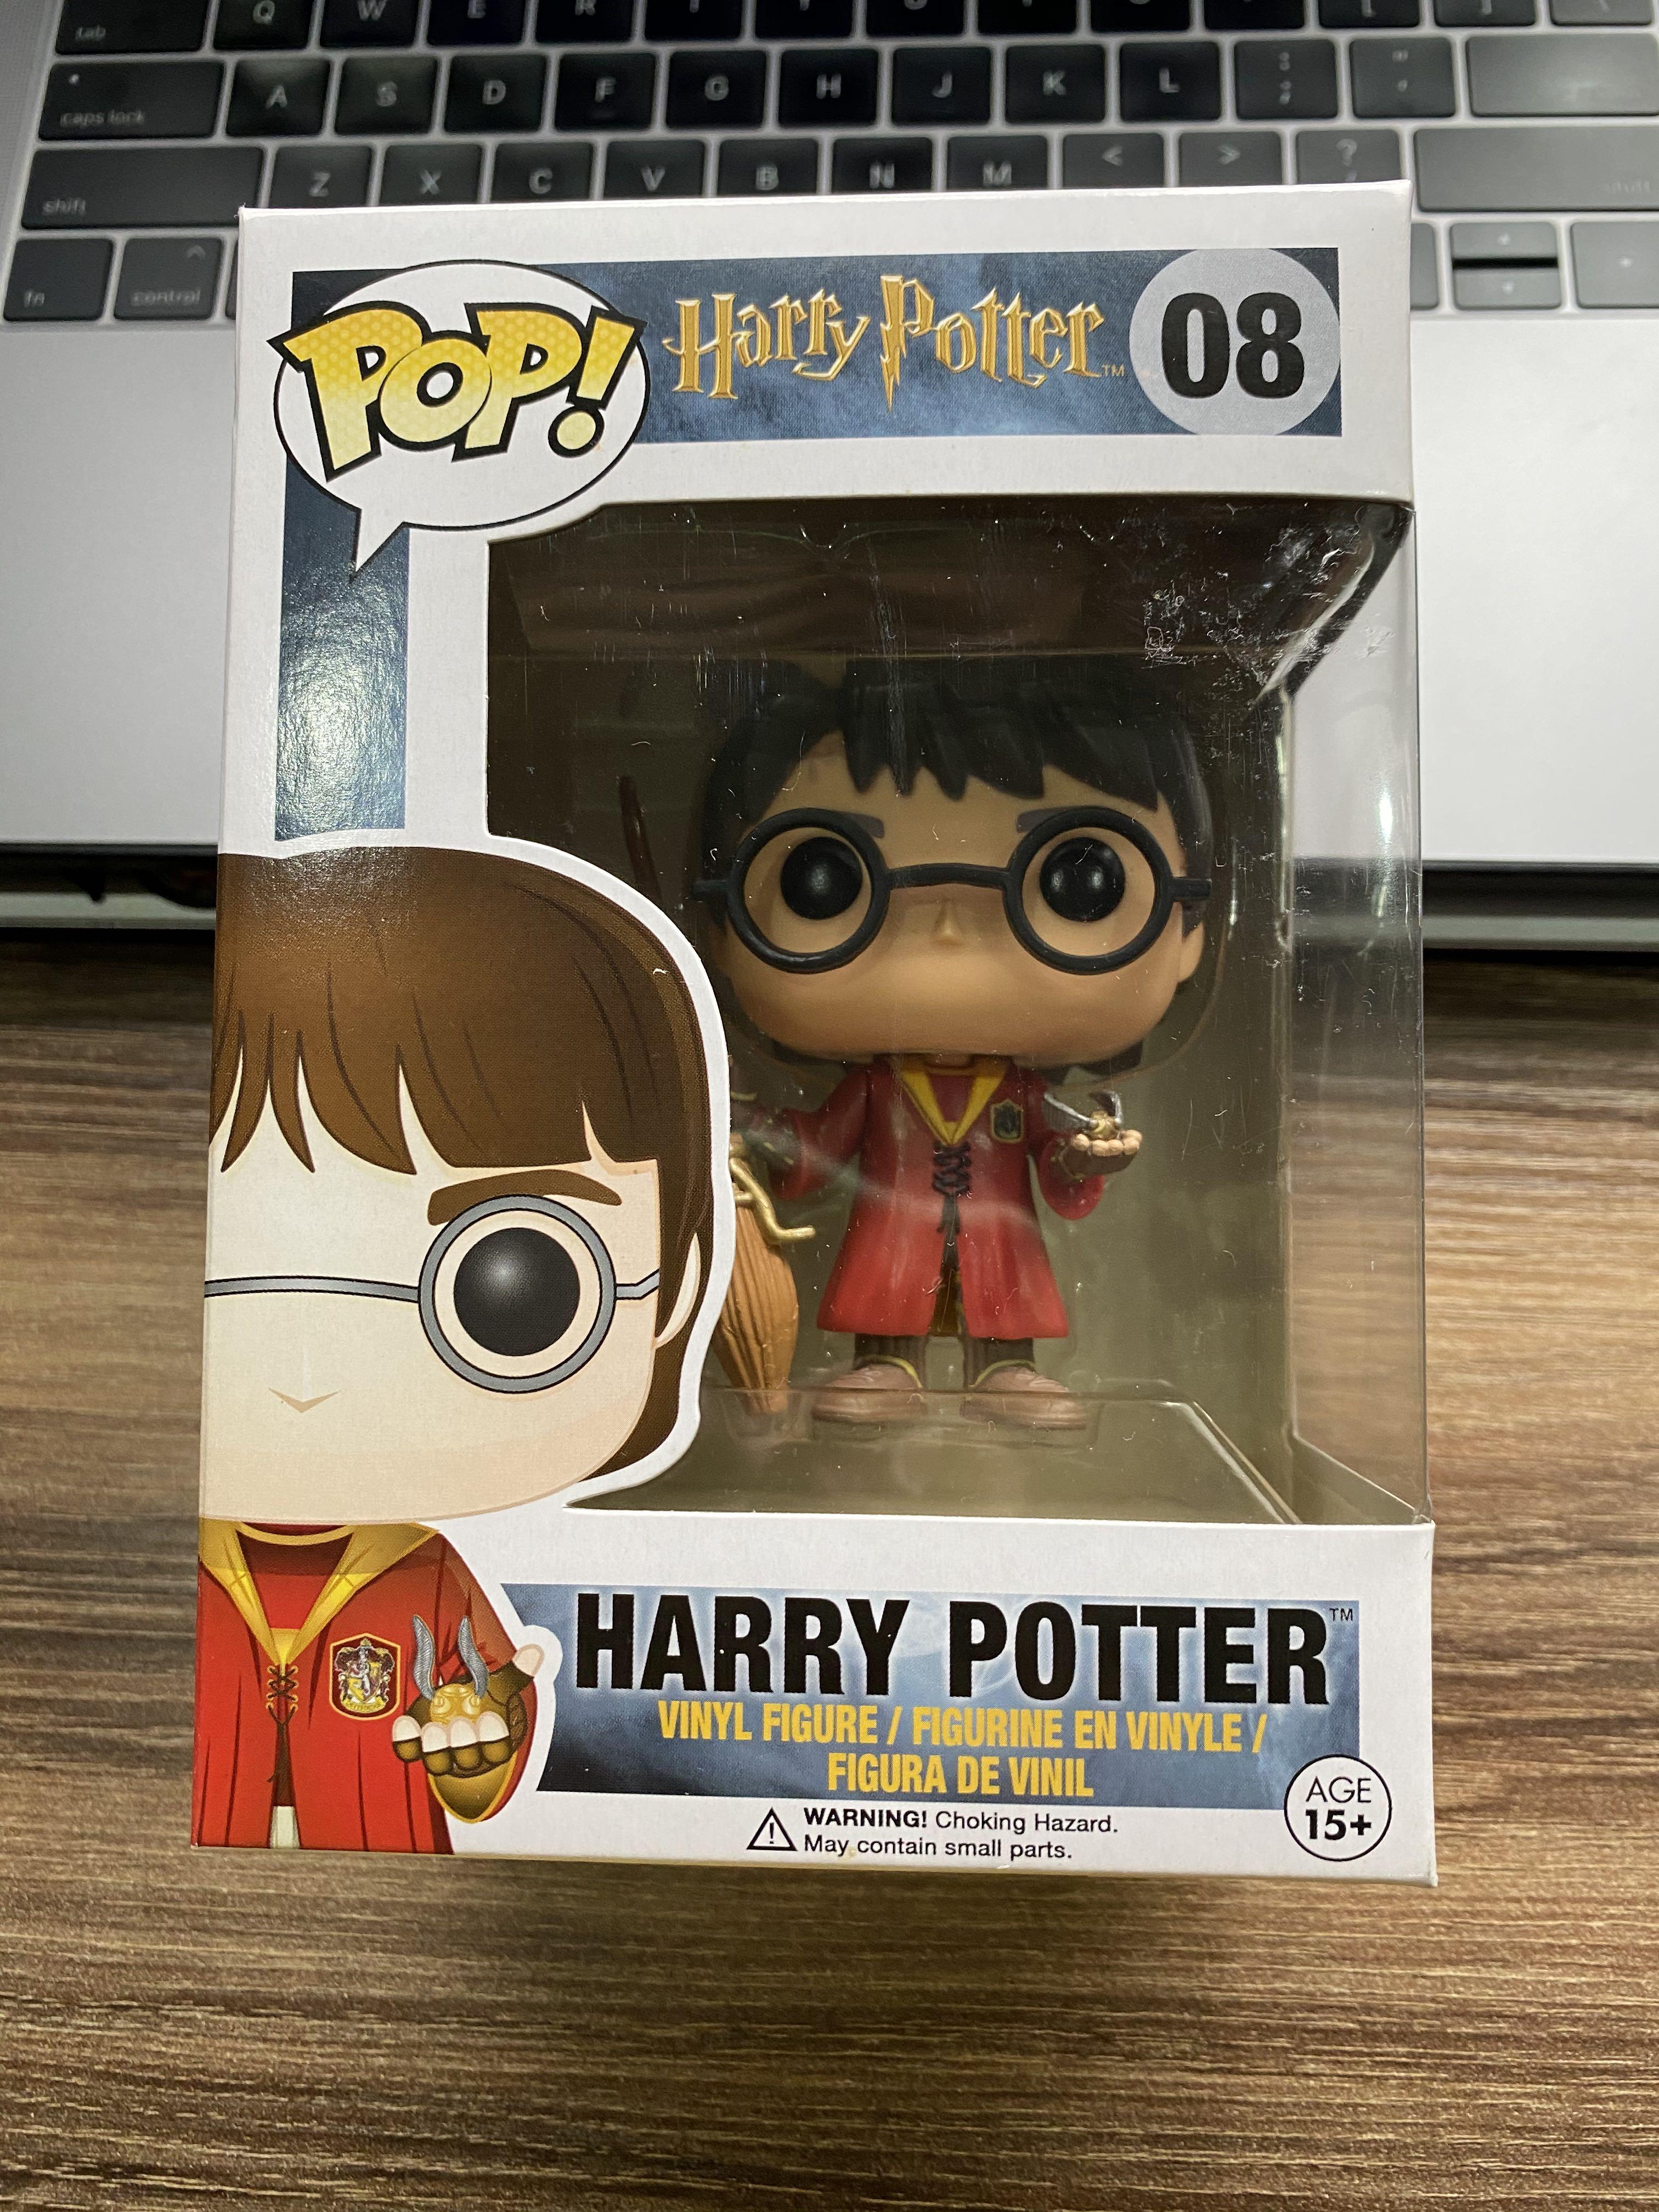 Harry Potter #08 (Quidditch) Funko Pop! - Harry Potter